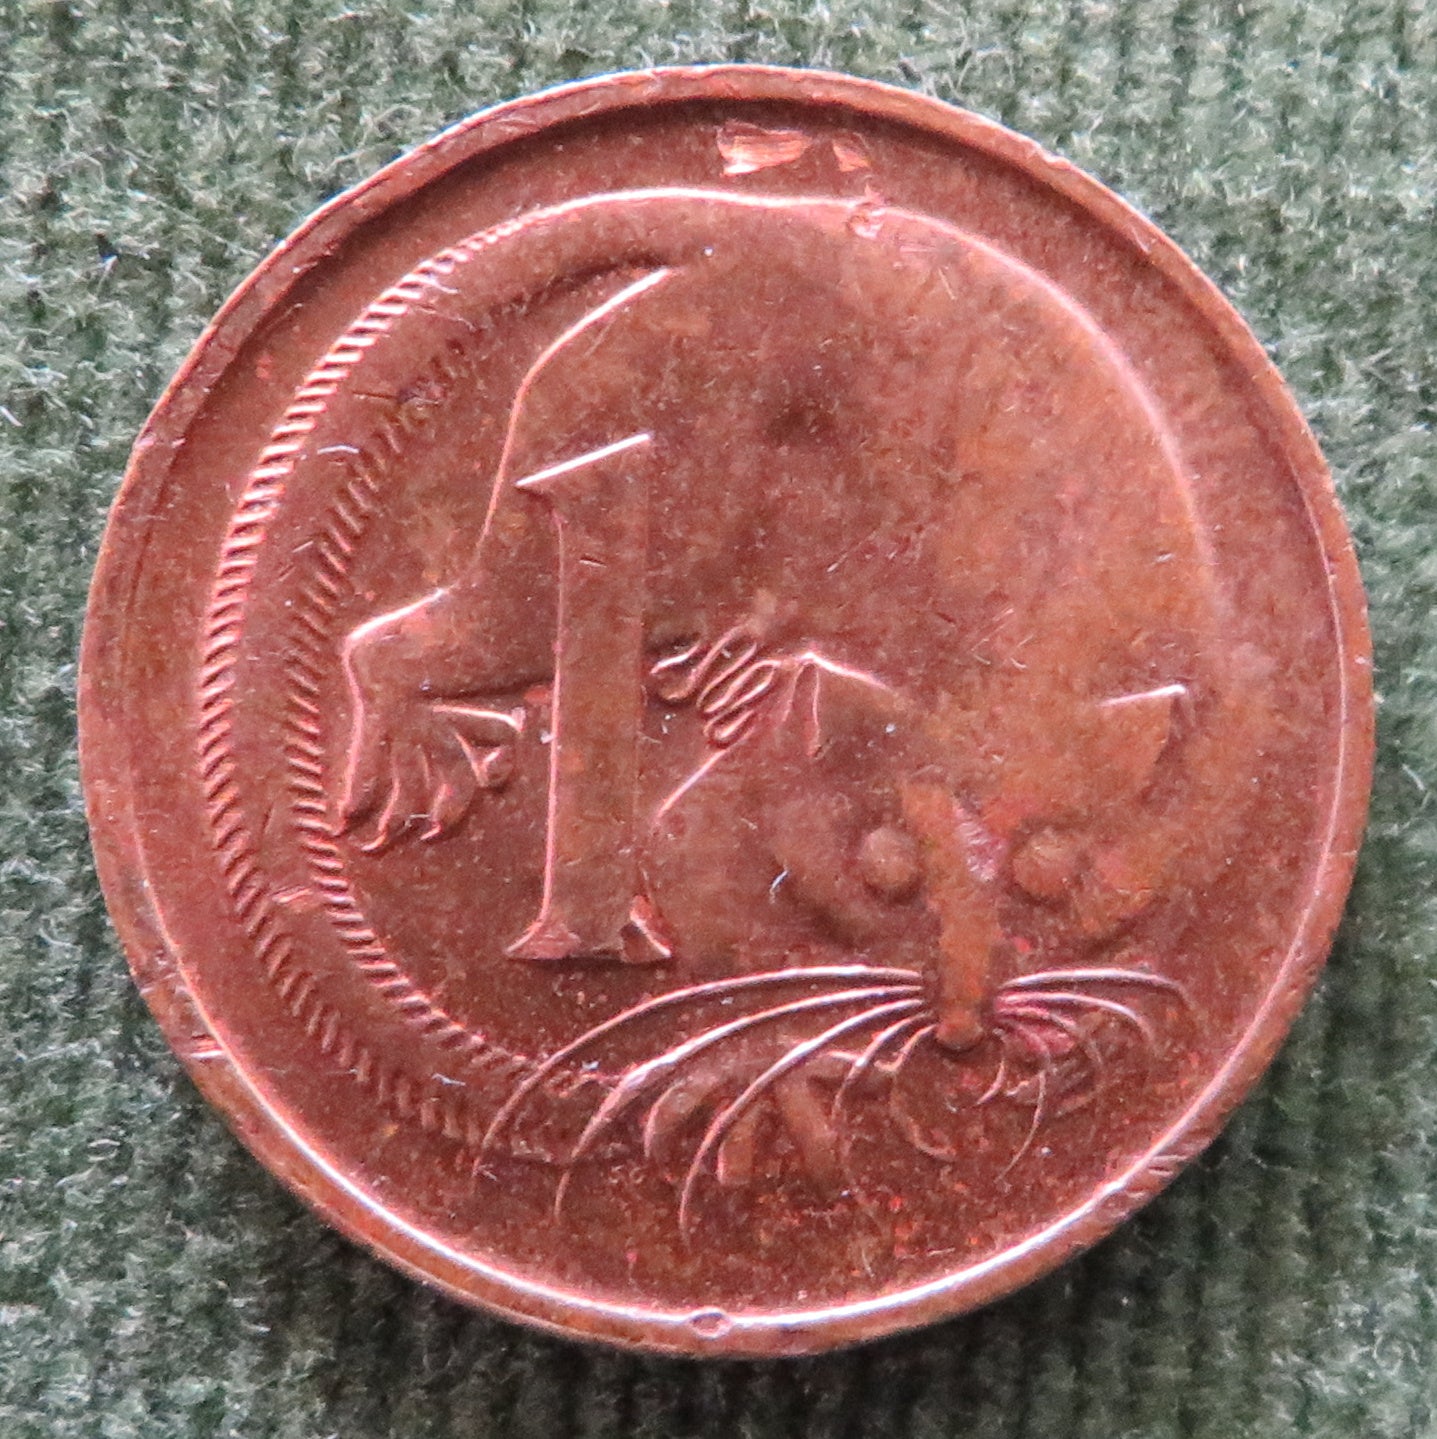 Australian 1985 1 Cent Queen Elizabeth Coin - VF